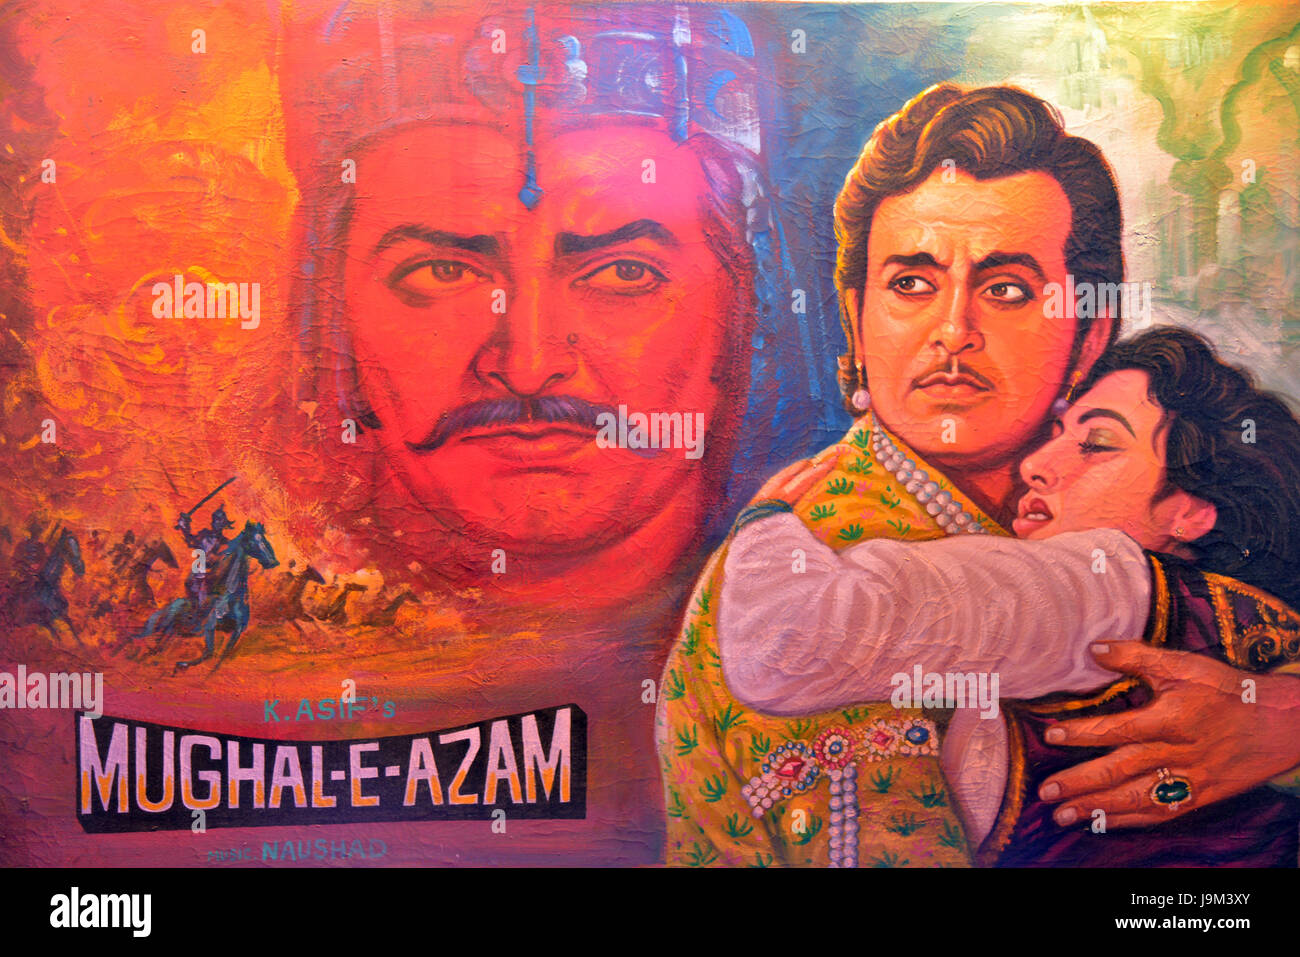 Mughal E Azam Poster De Cine Indio De Hiindi De Bollywood K Asif Naushad Dilip Kumar Madhubala India Asia Foto De La Vieja Vendimia De 1900s Fotografia De Stock Alamy